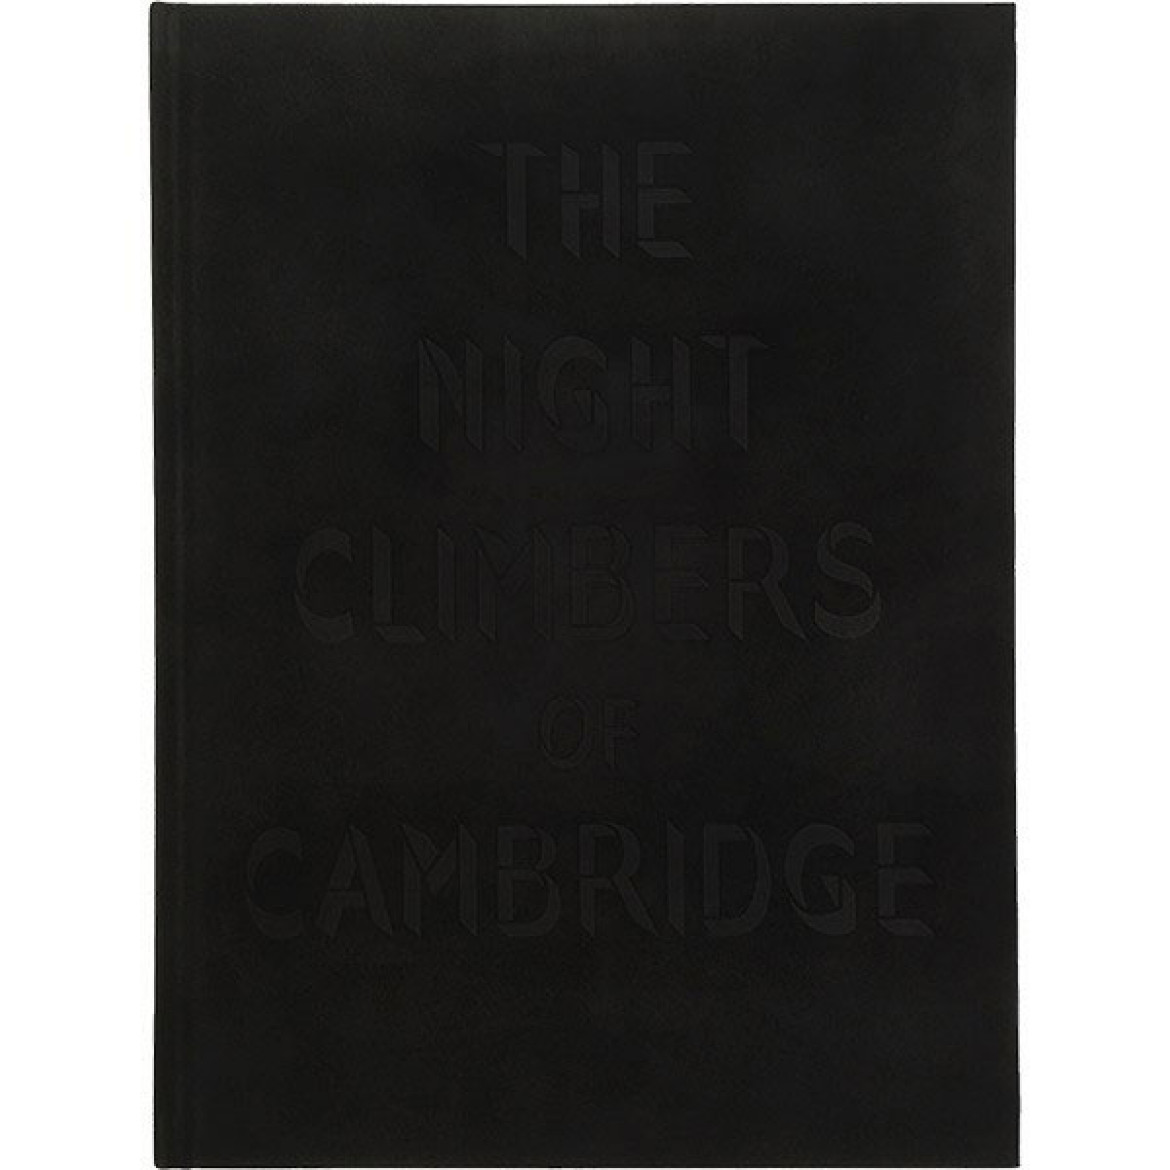 Thomas Mailaender "The Night Climbers of Cambridge”